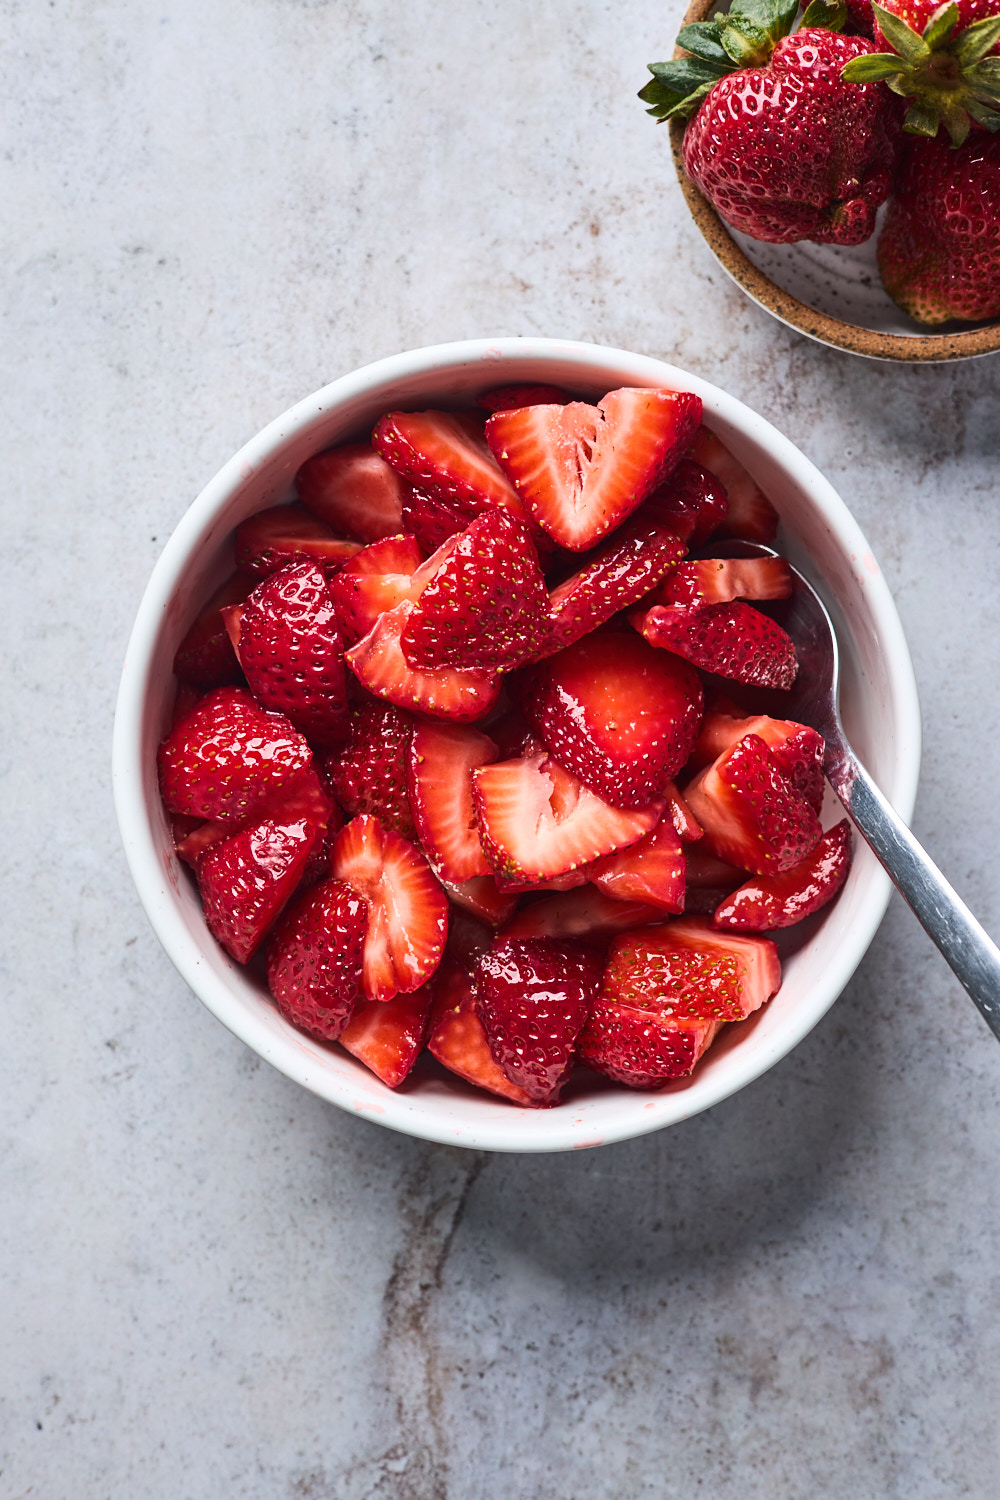 Easy Homemade Strawberry Shortcake